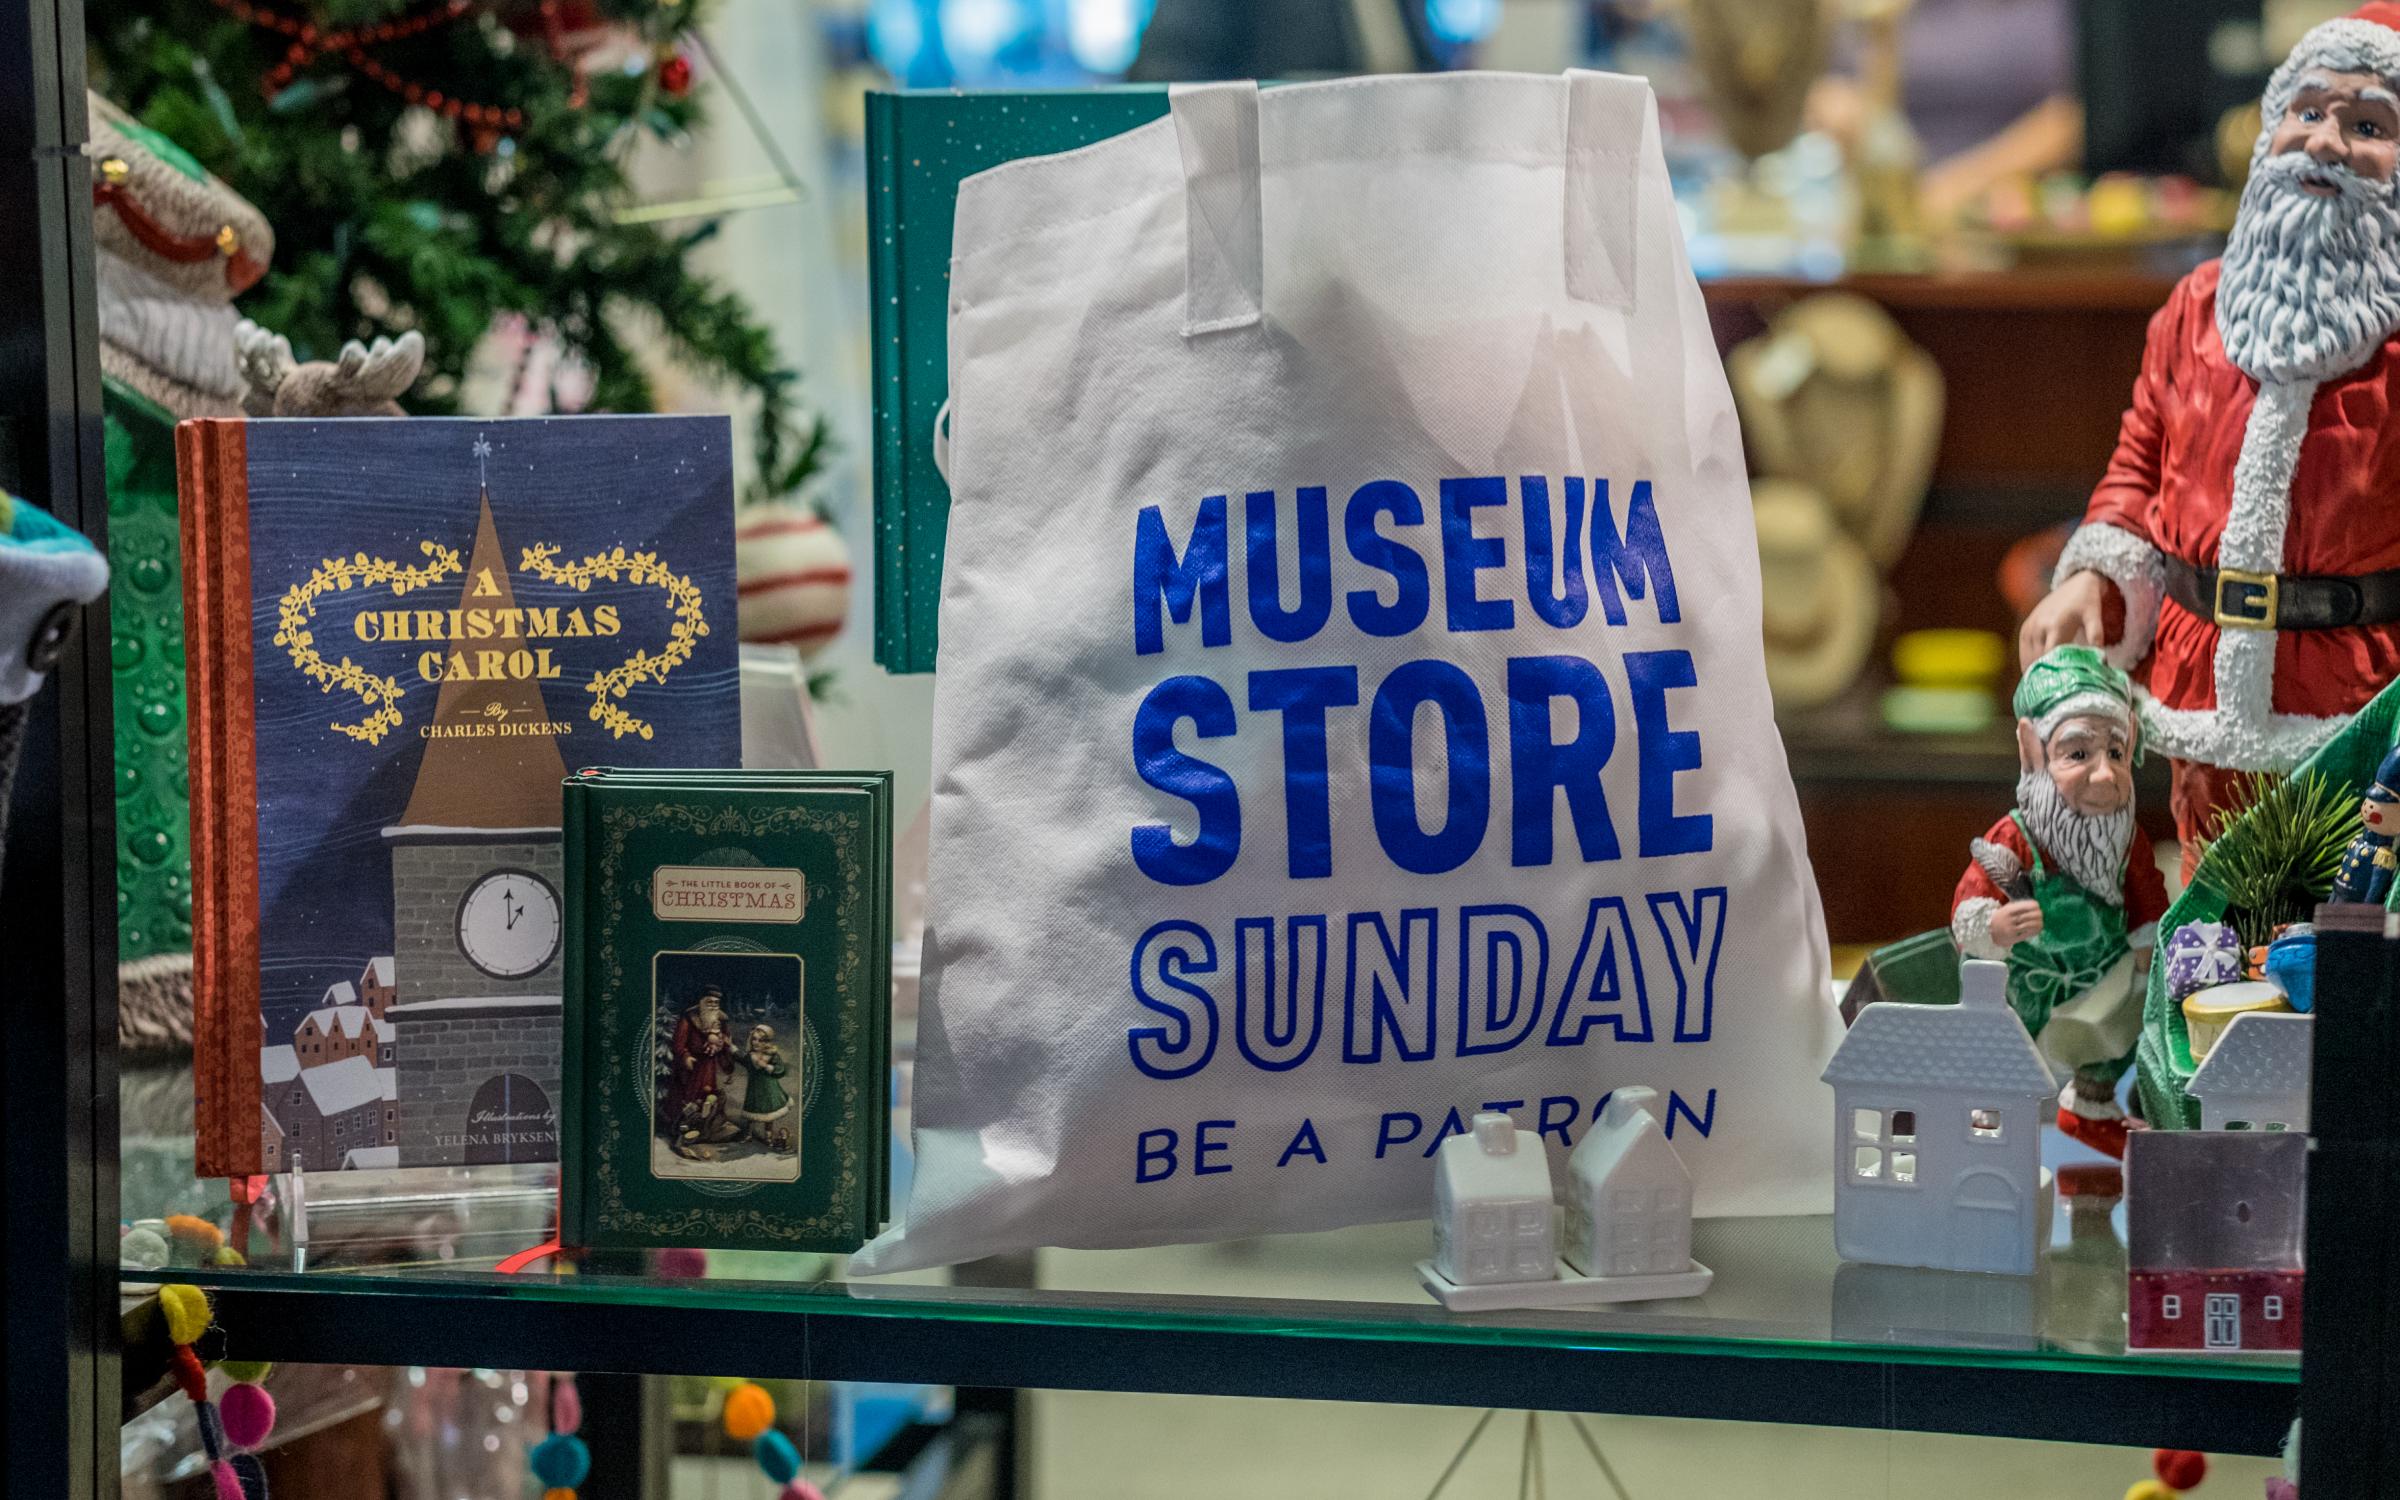 Museum Store Sunday shopping bag at UMFA